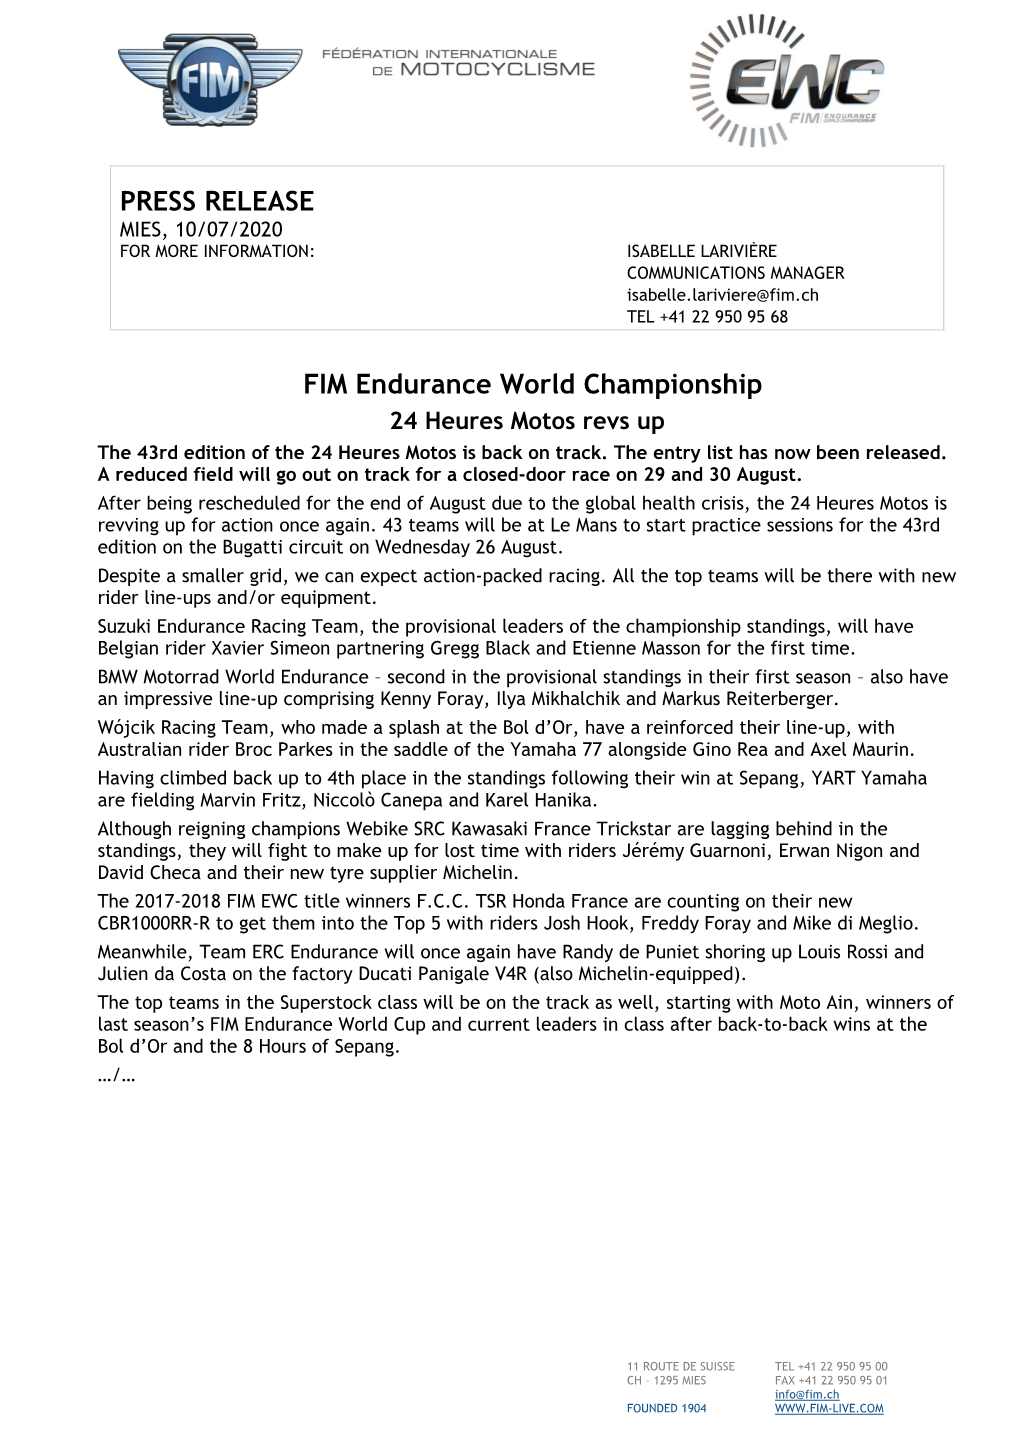 PRESS RELEASE FIM Endurance World Championship